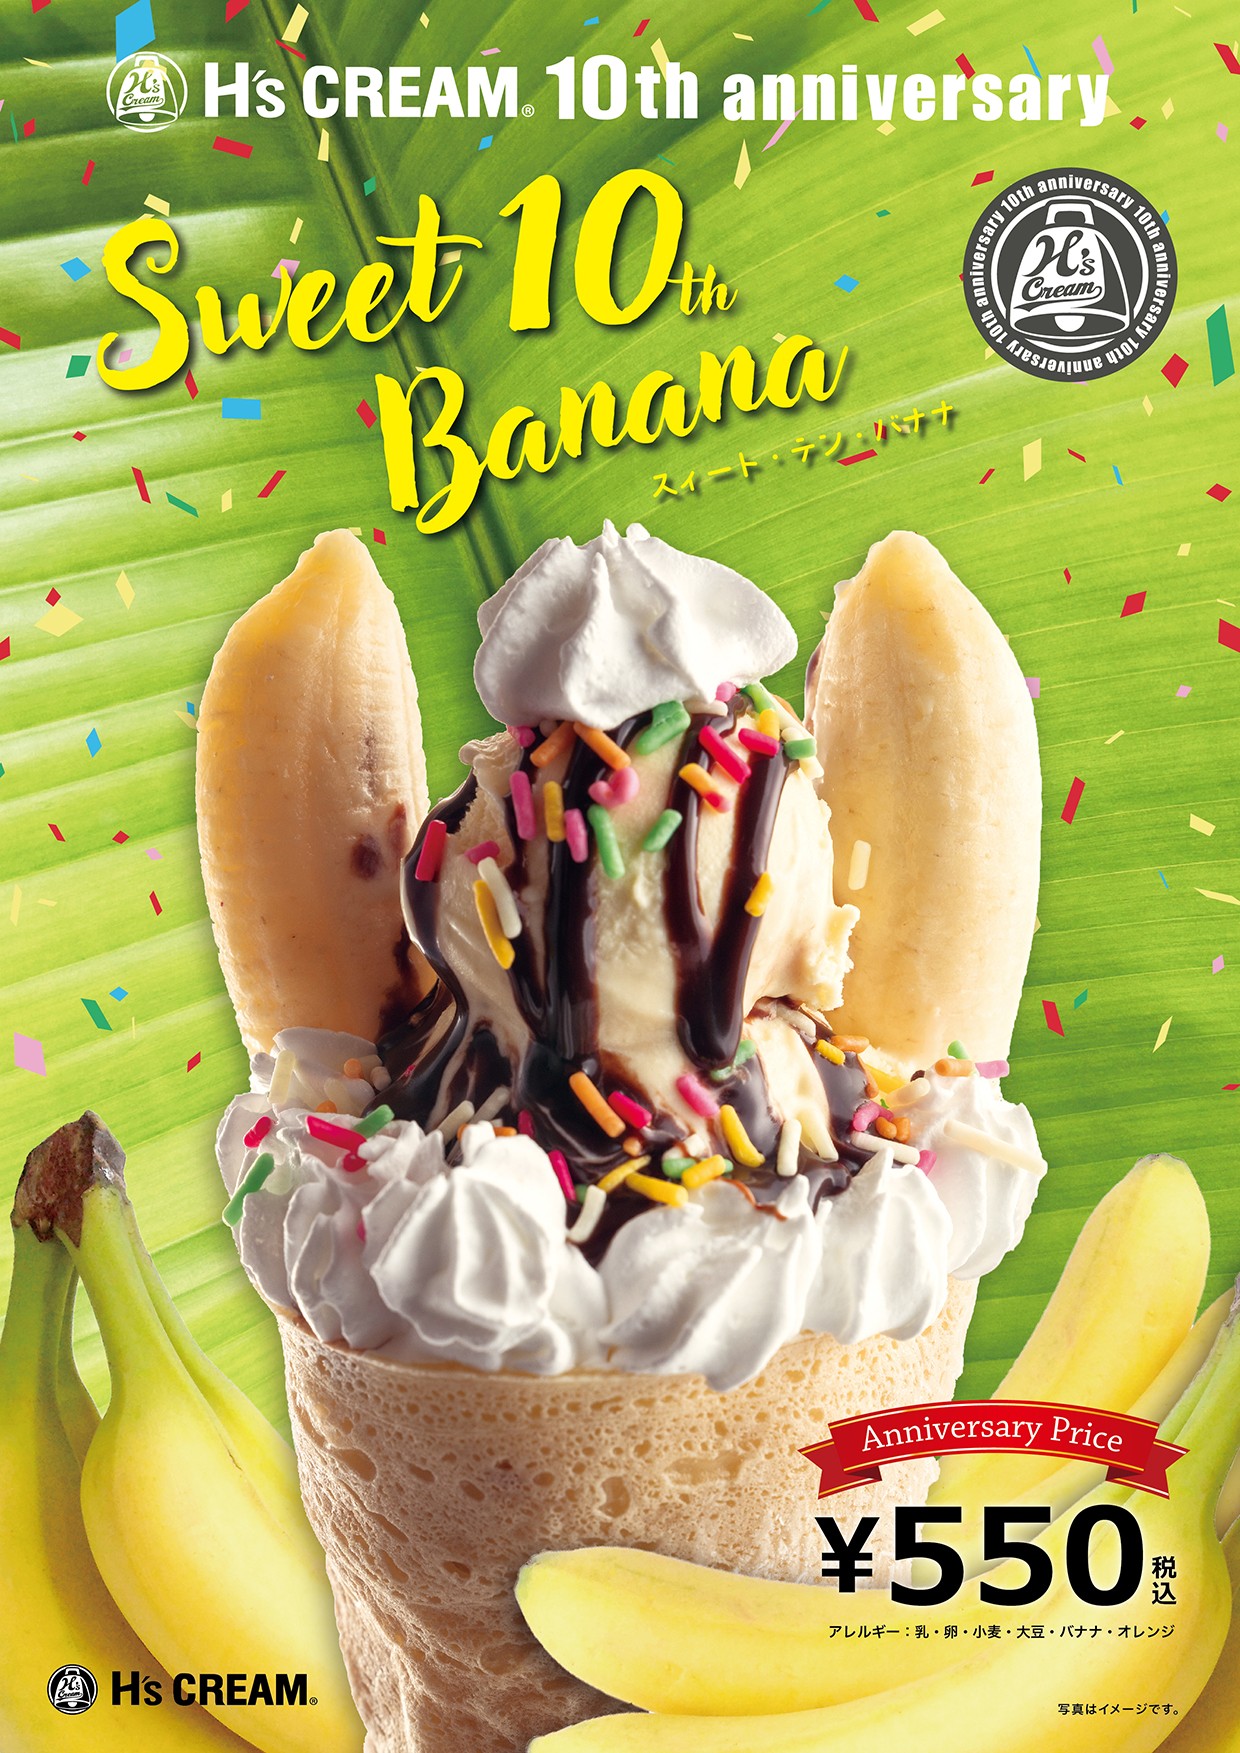 10th anniversary Sweet 10 banana